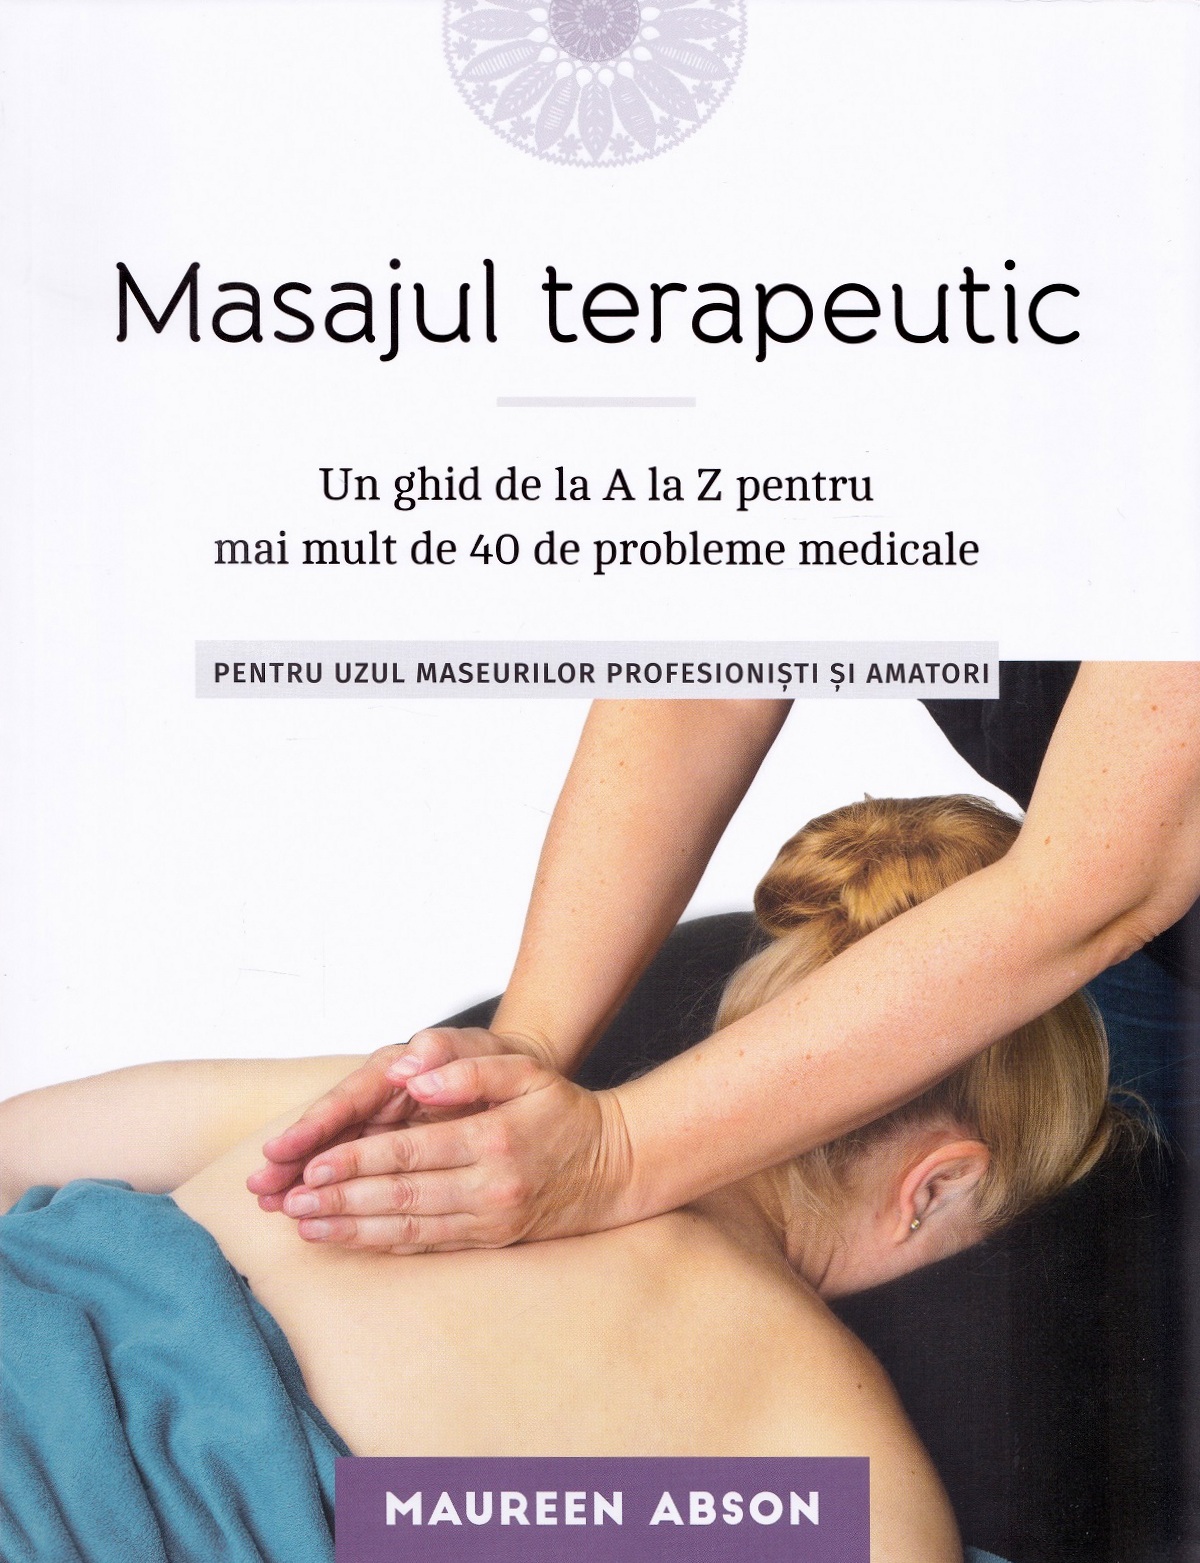 Masajul terapeutic - Maureen Abson